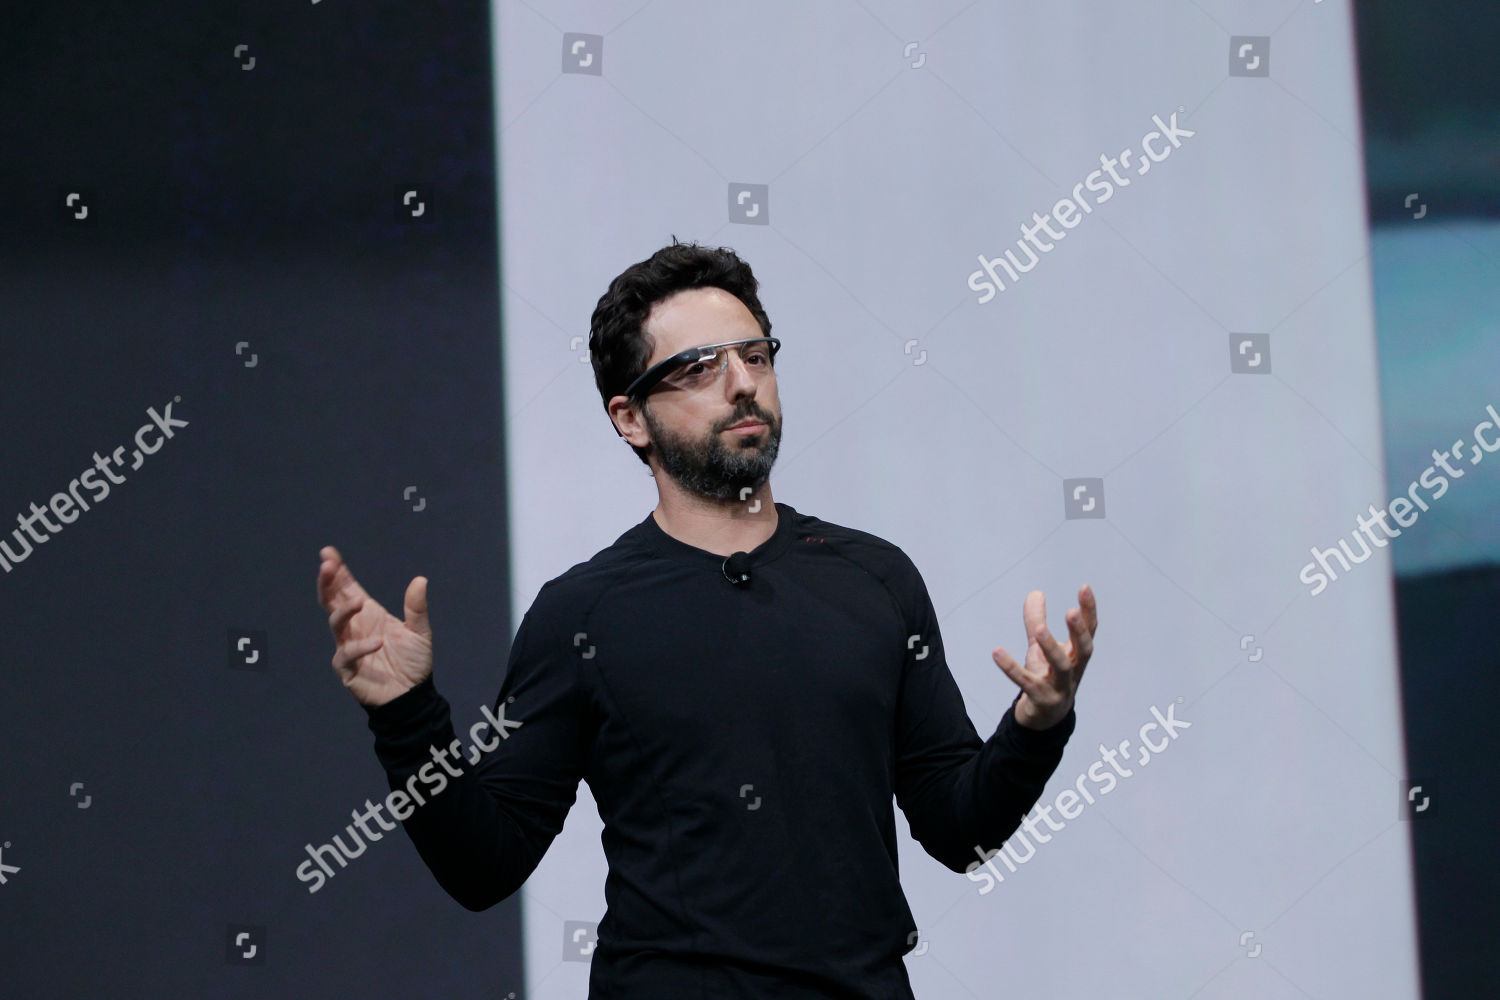 Mandatory Credit: Photo by Paul Sakuma/AP/Shutterstock (5935045bb) Sergey Brin Google co-founder Sergey Brin demonstrates Google's new Glass, wearable internet glasses, at the Google I/O conference in San Francisco Google Tablet, San Francisco, USA